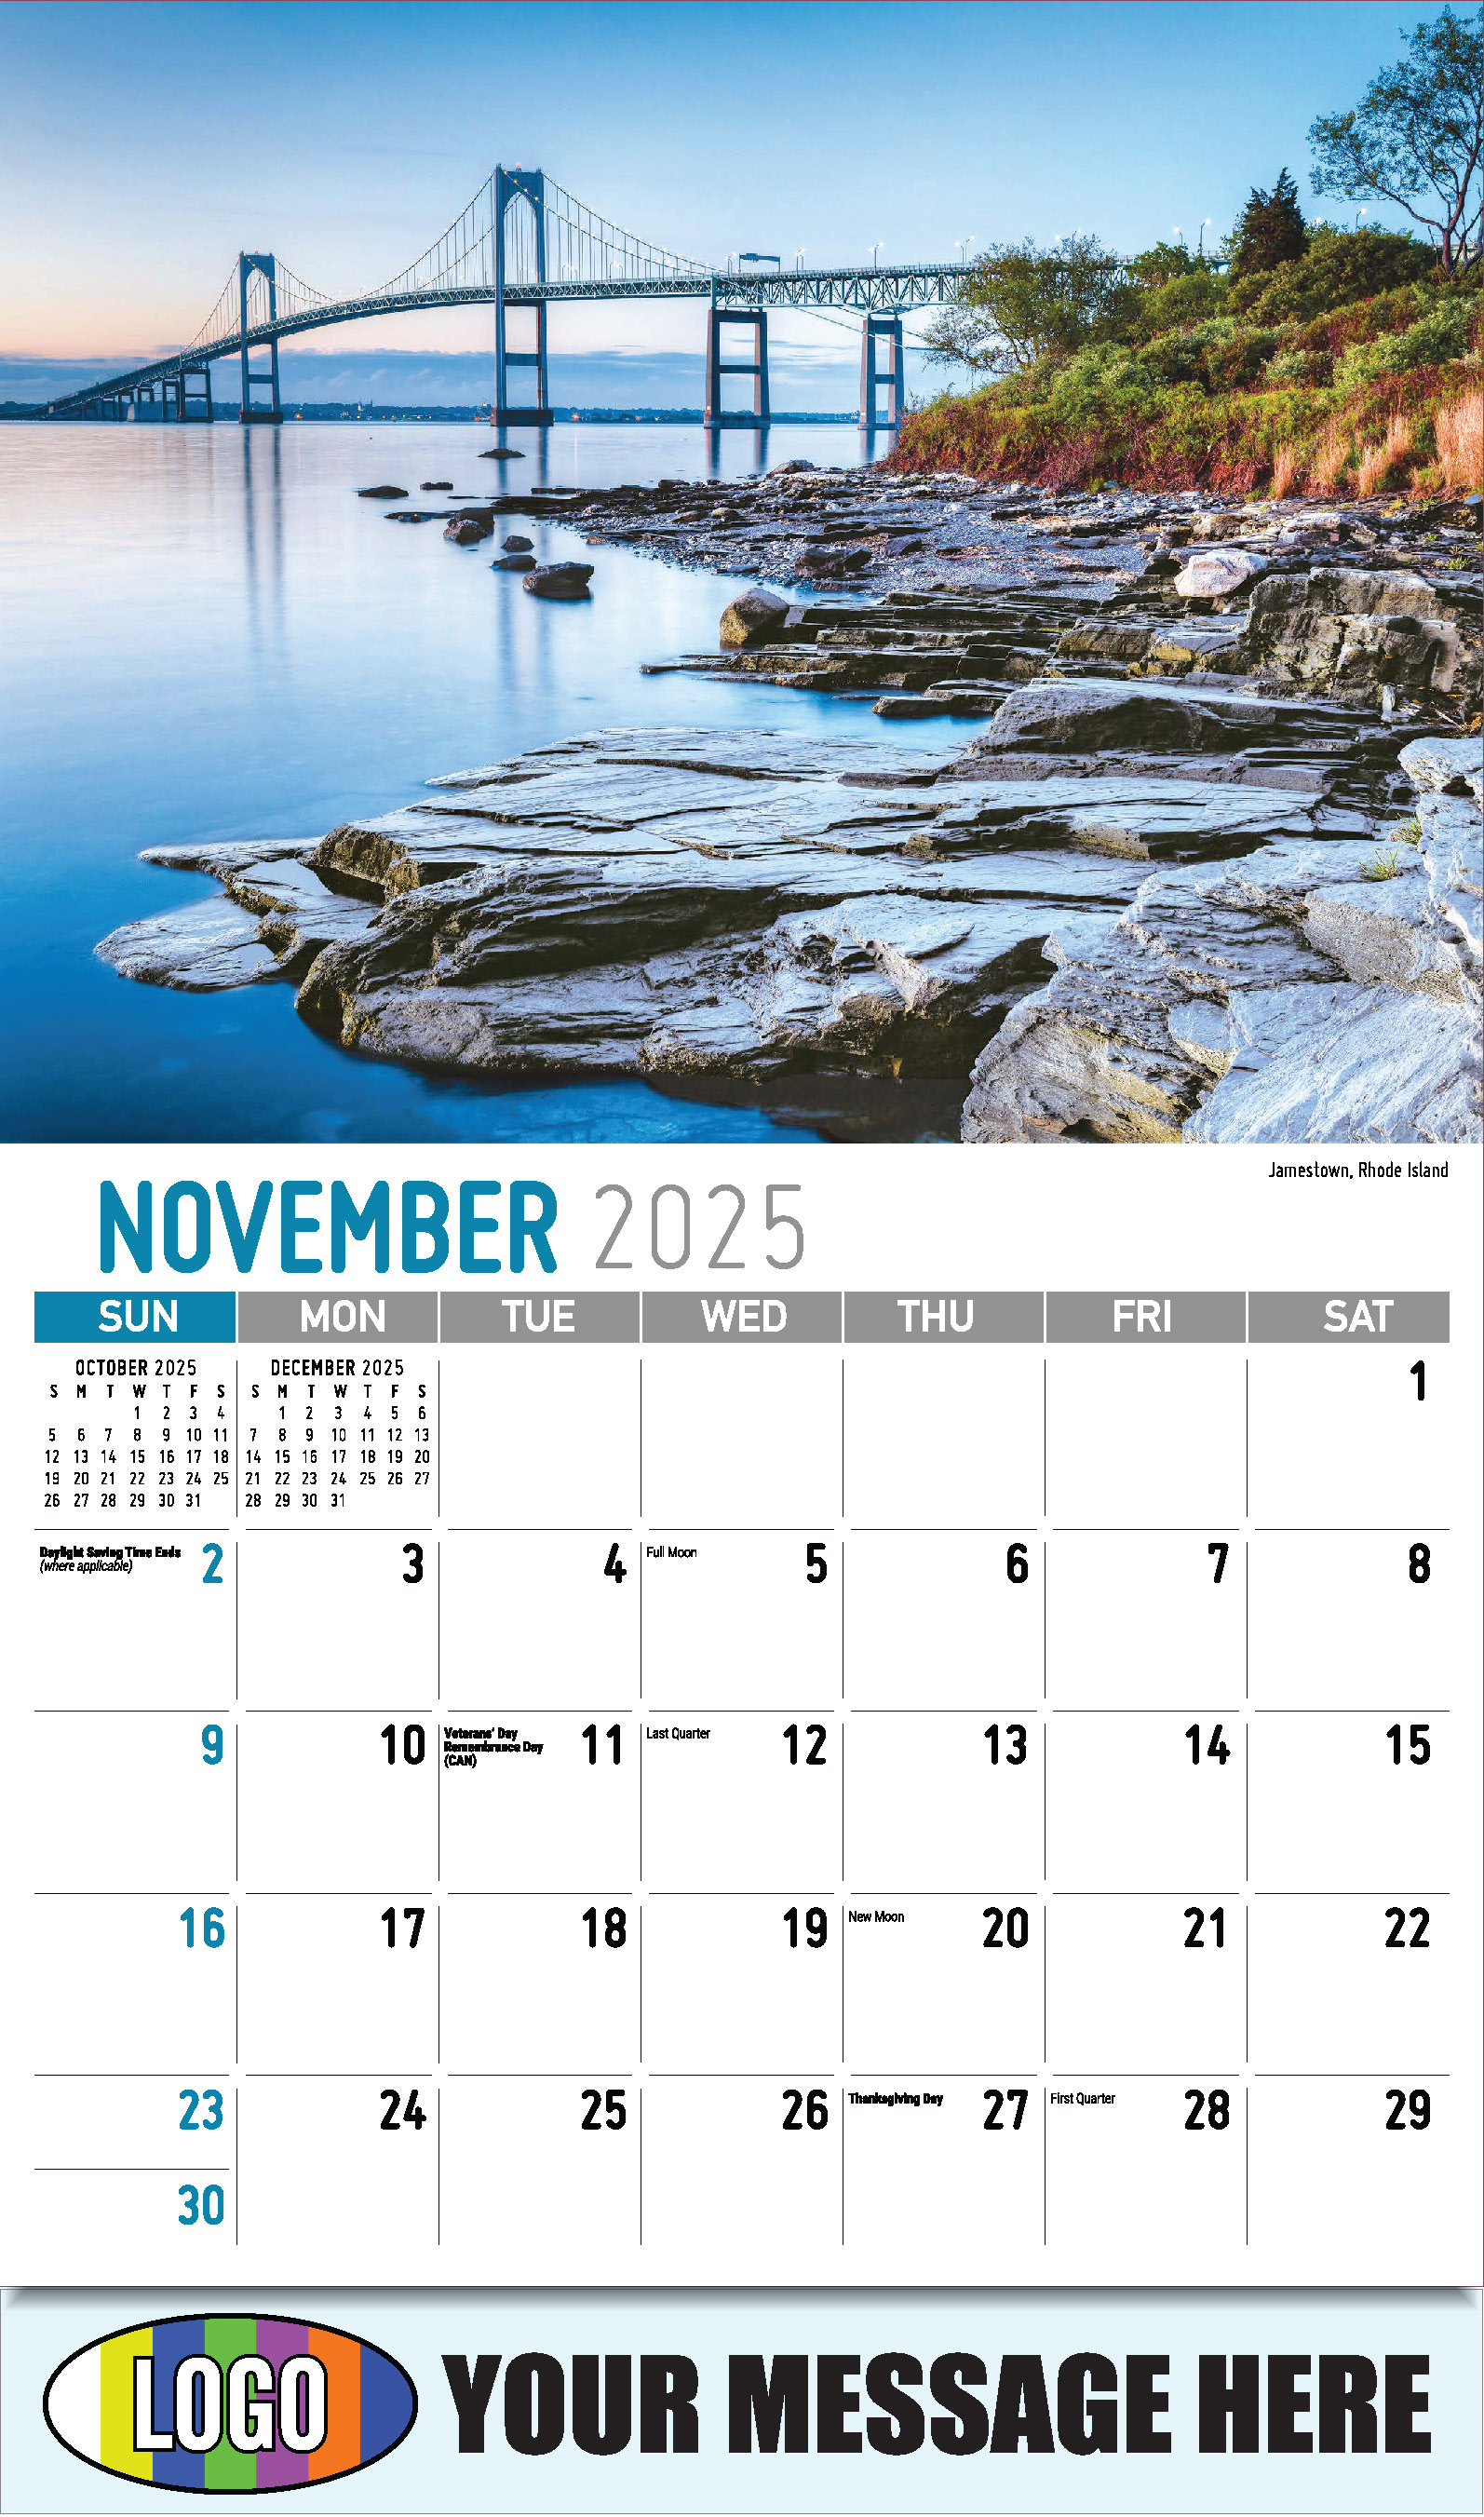 Scenes of New England 2025 Business Advertising Wall Calendar - November